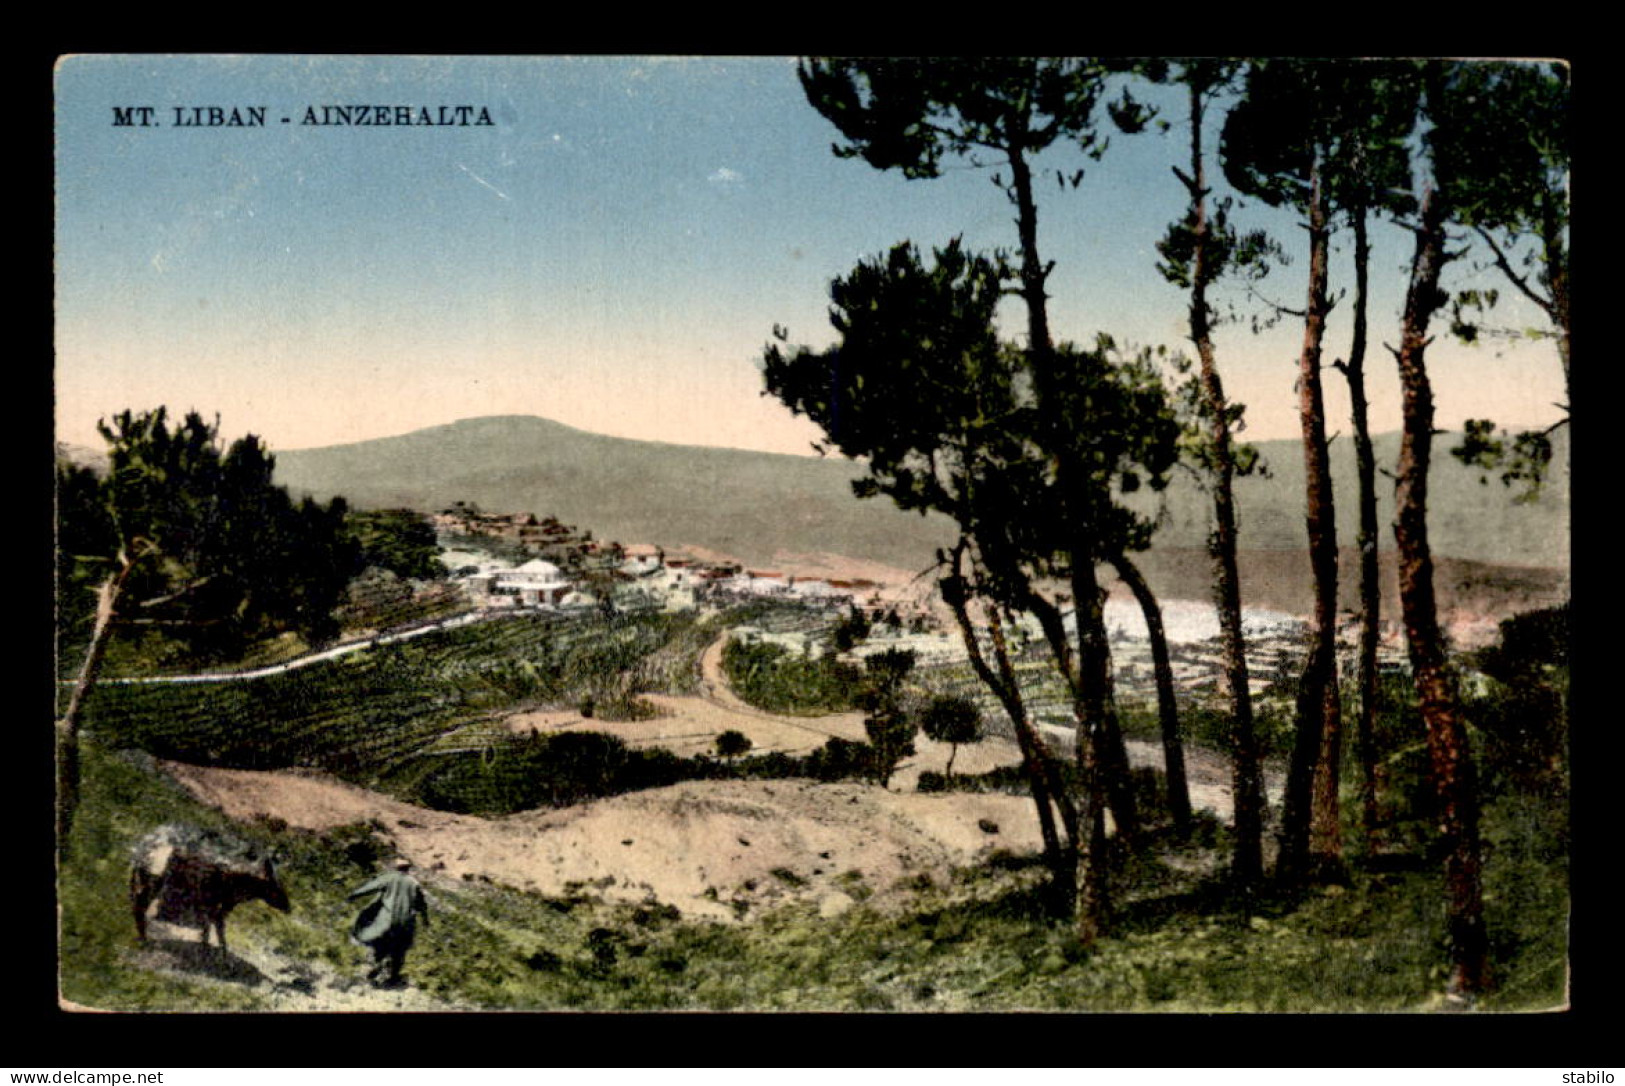 LIBAN - AINZEHALTA - Lebanon